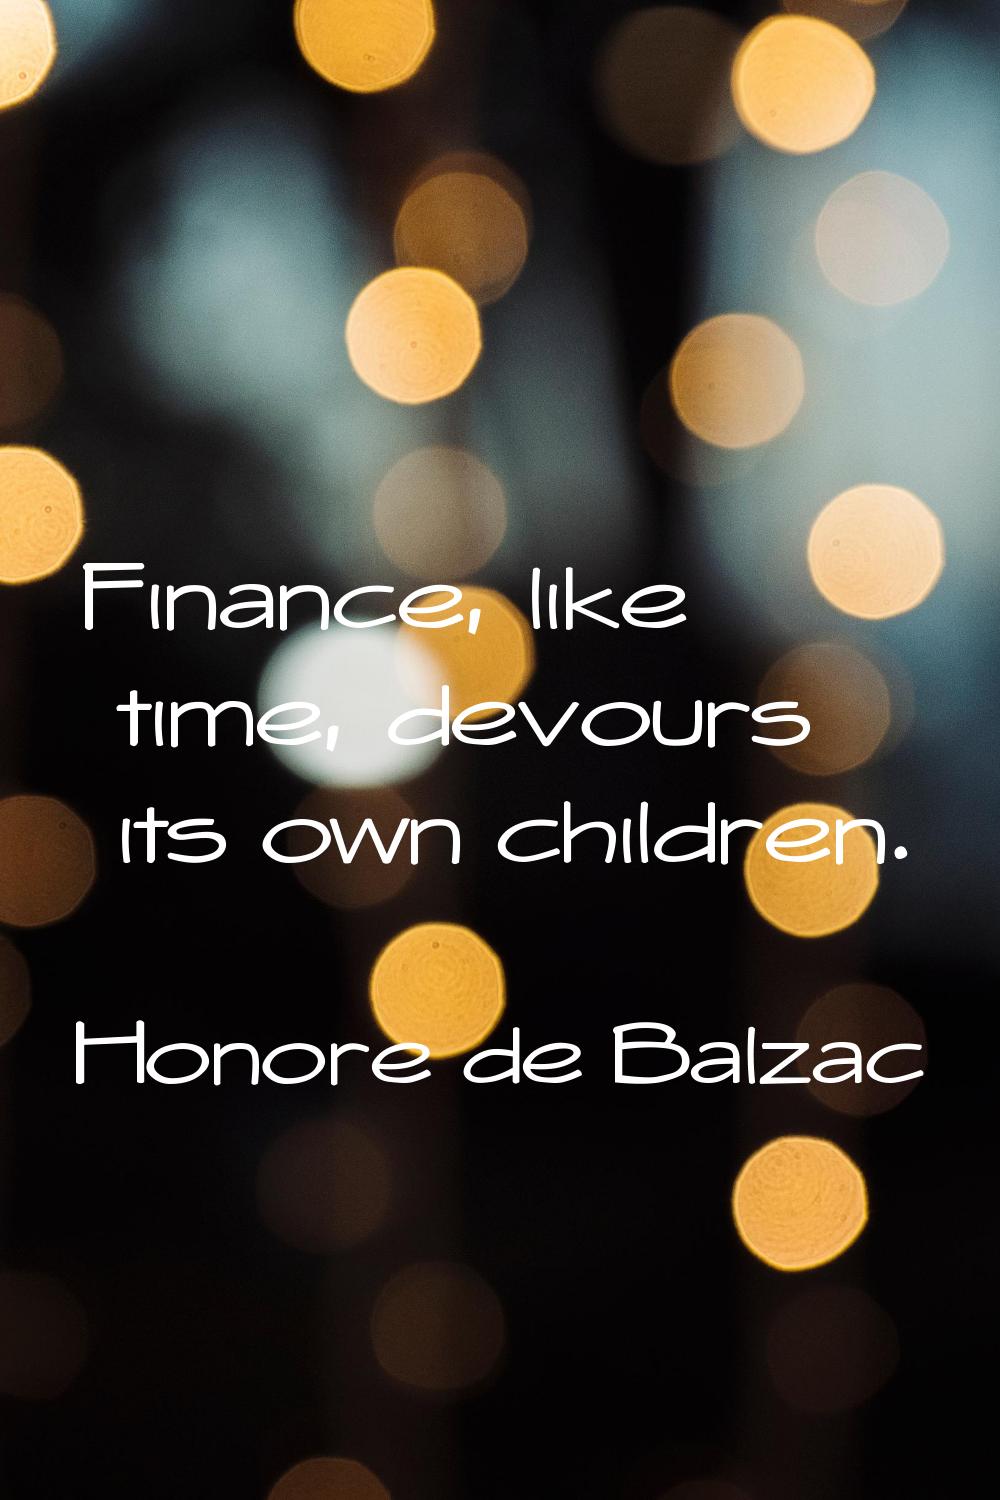 Finance, like time, devours its own children.